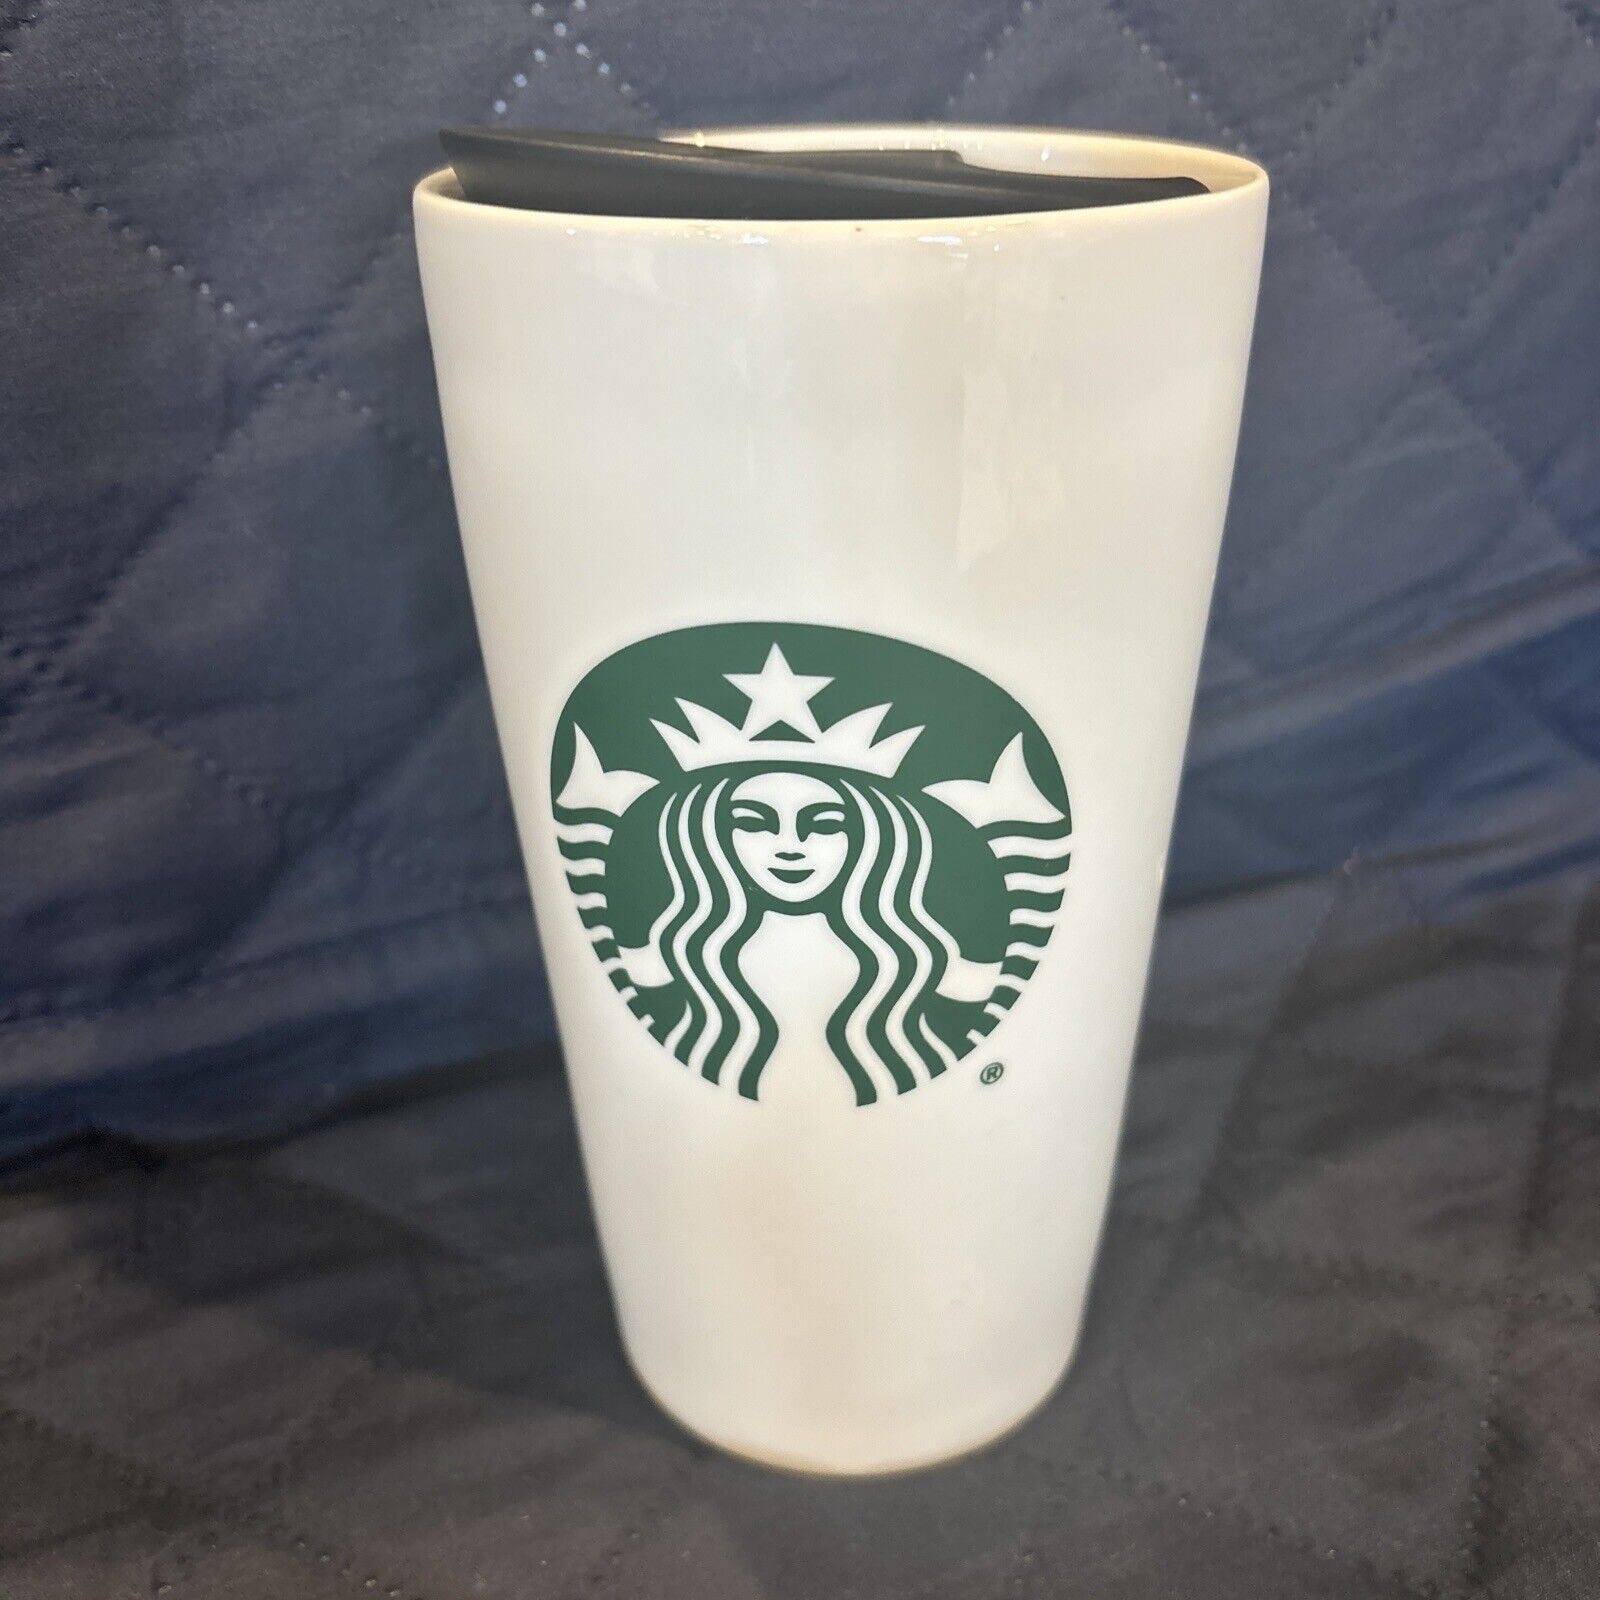 NEW STARBUCKS Ceramic Travel Coffee Mug Tumbler White 12 Oz -2021